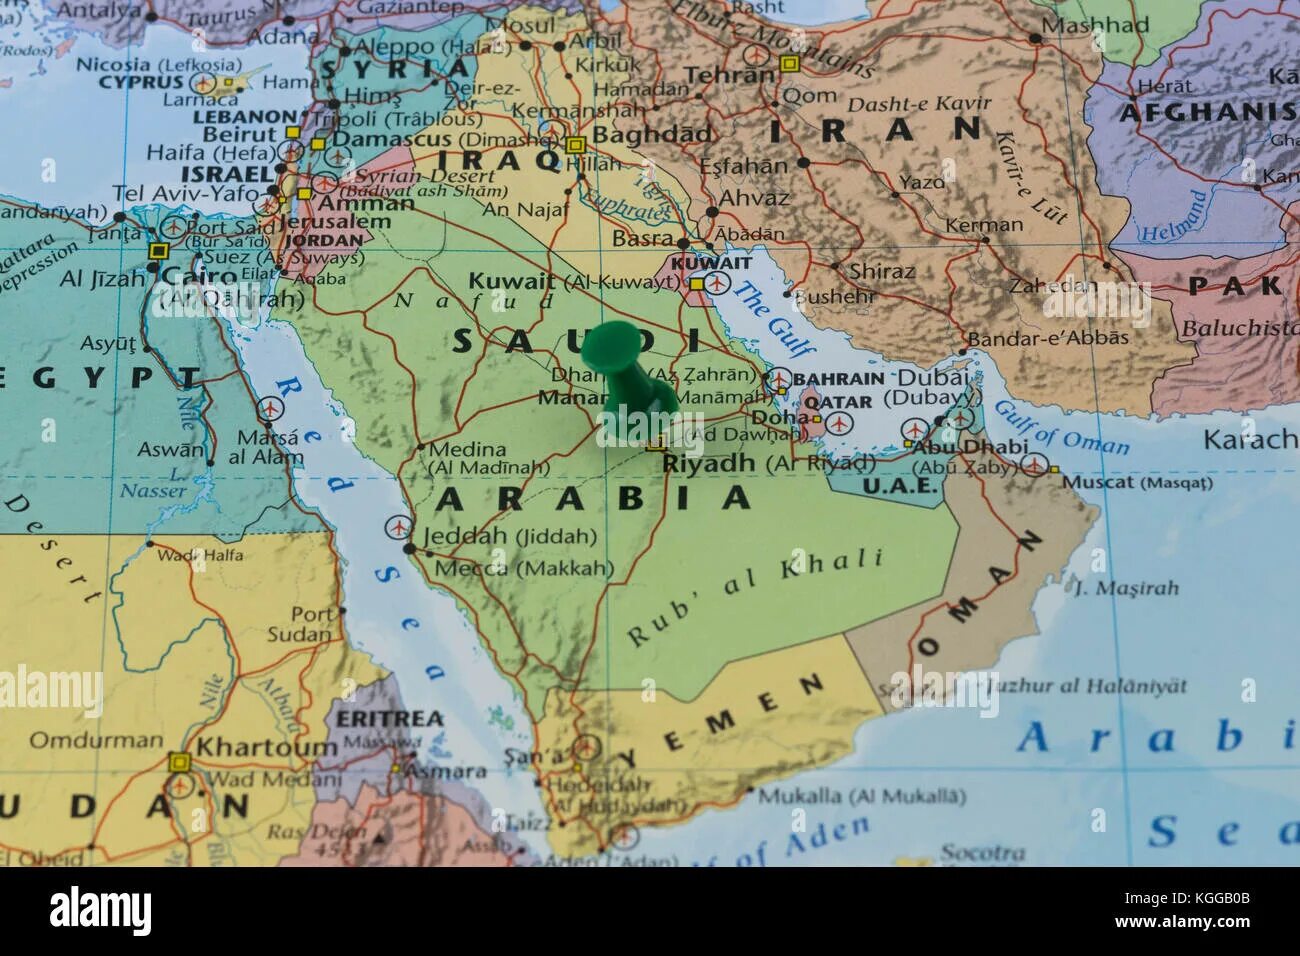 Аравийский полуостров Саудовская Аравия. Эр Рияд на карте Саудовской Аравии. Политическая карта Аравийского полуострова. Государства Персидского залива на карте. Мекка и медина на карте